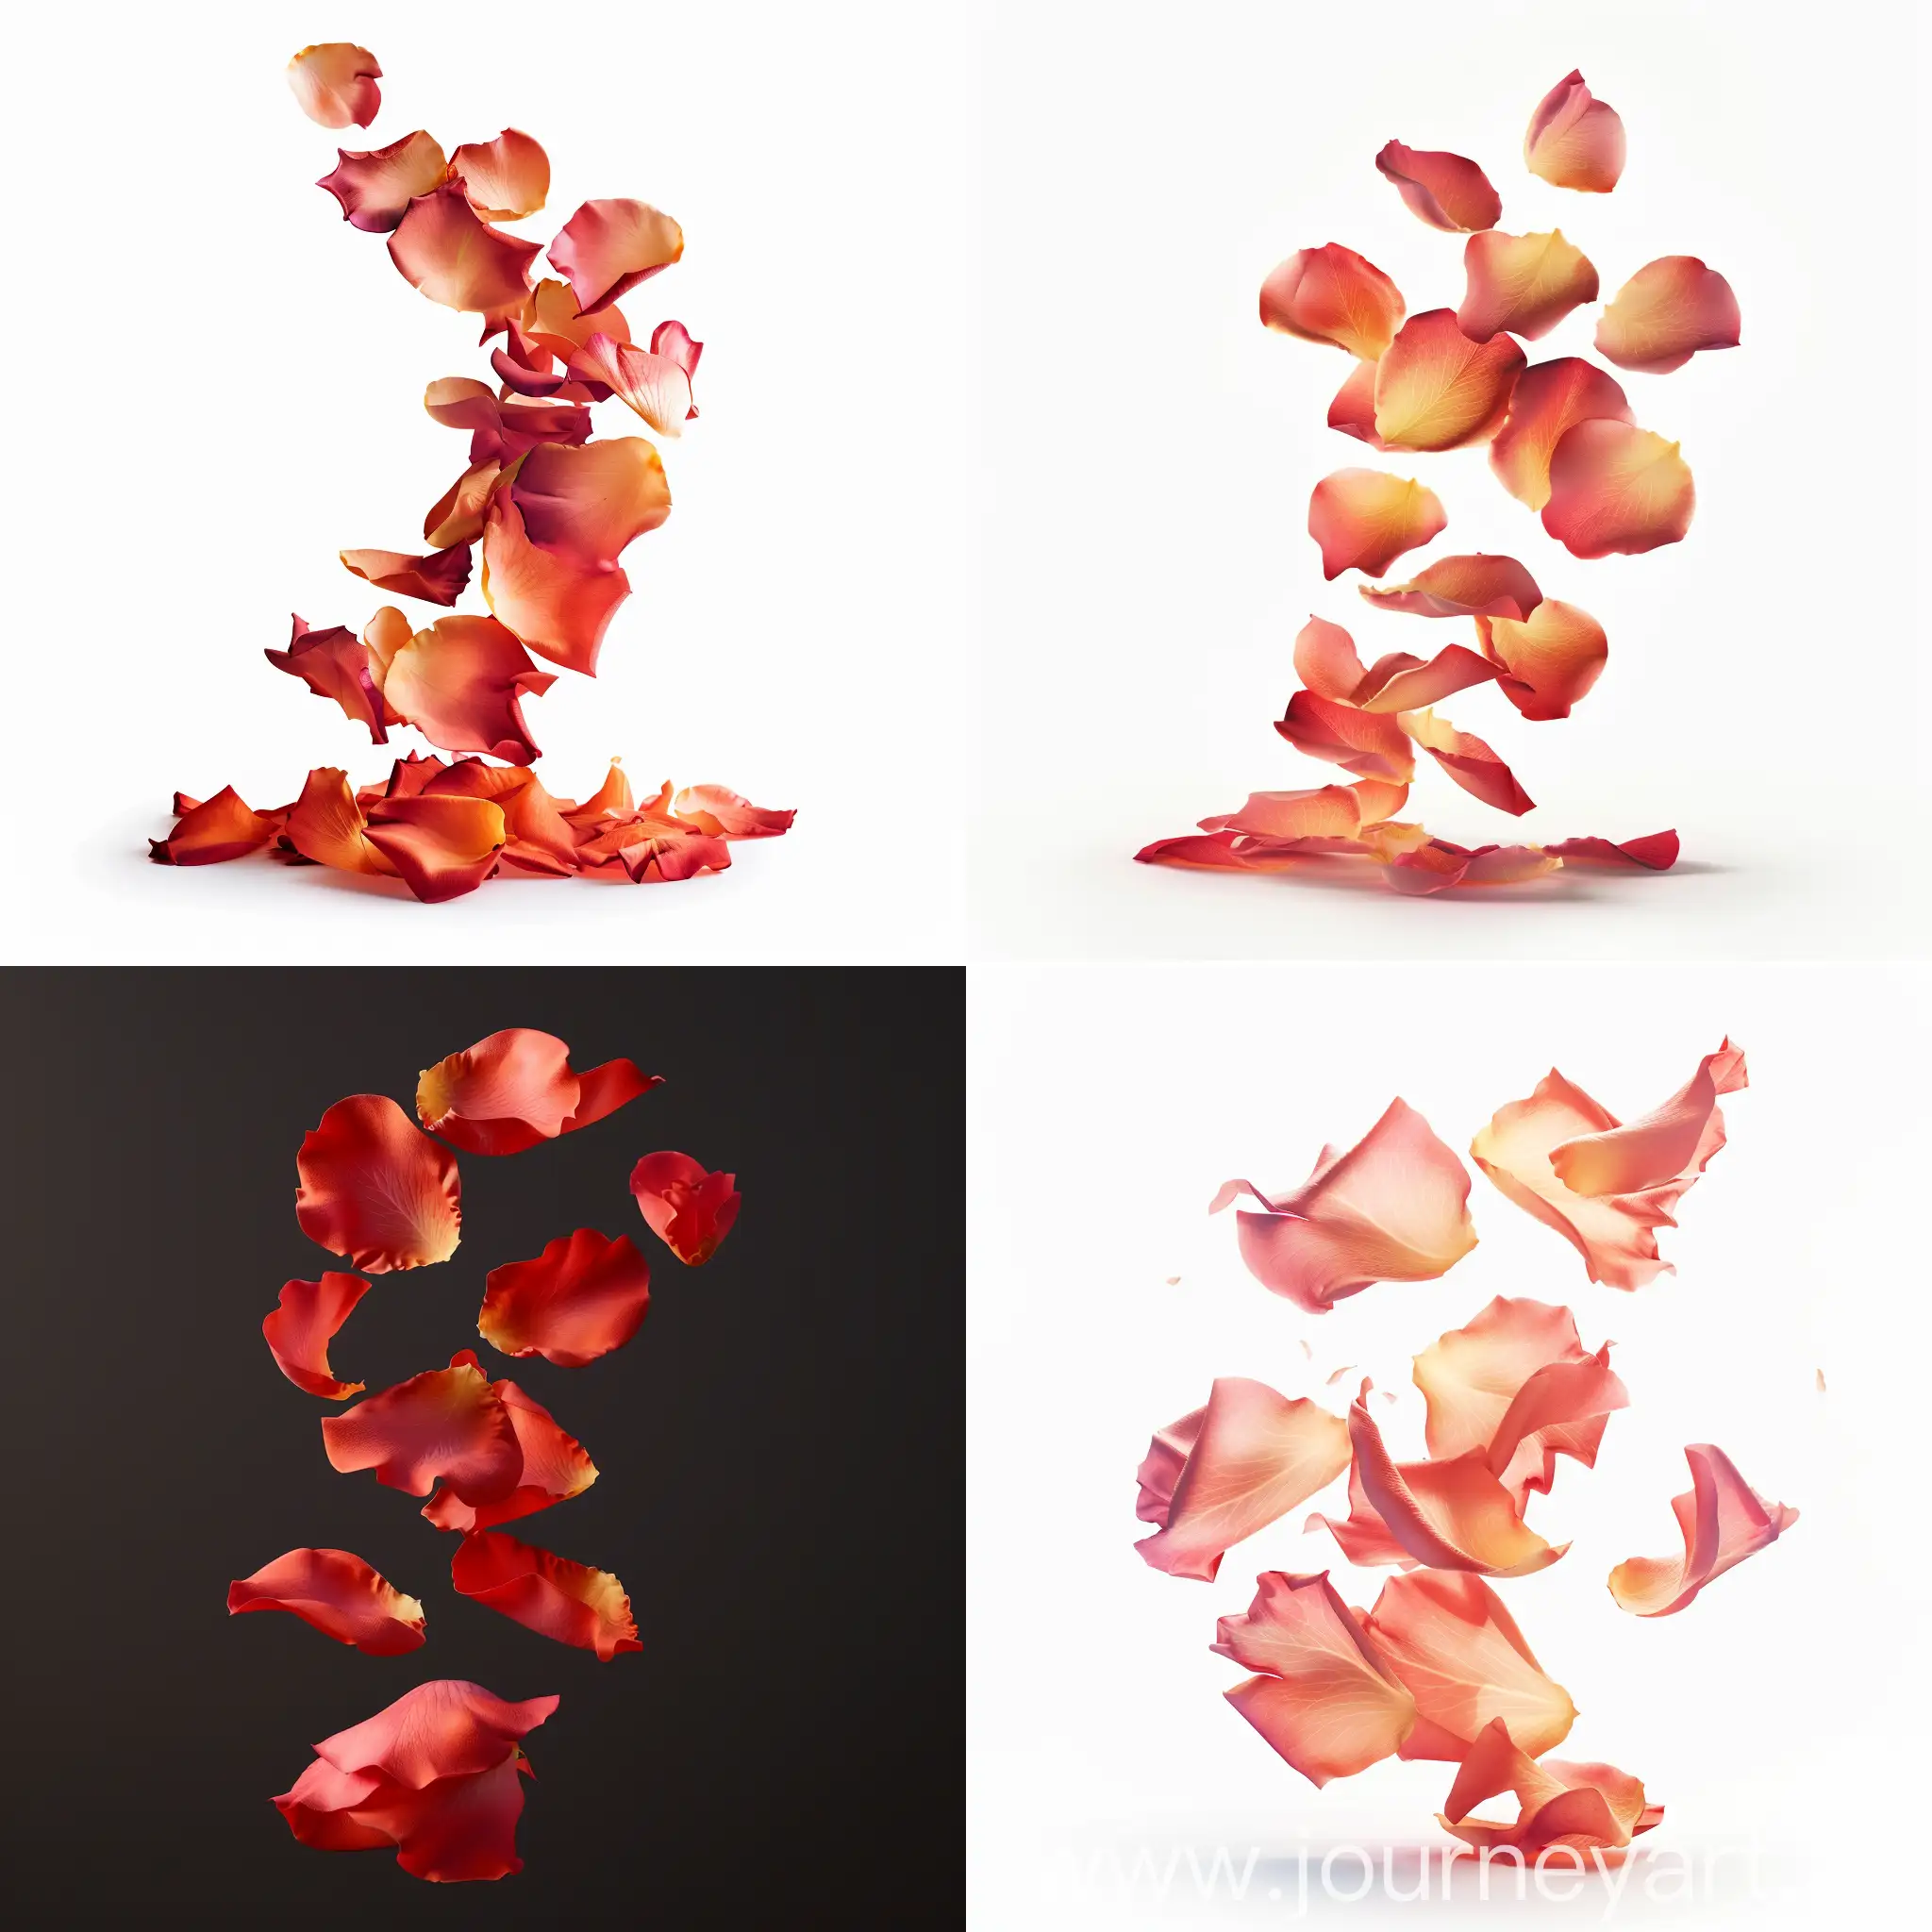 Elegant-Rose-Petals-in-Flight-Hyperrealistic-Food-Photography